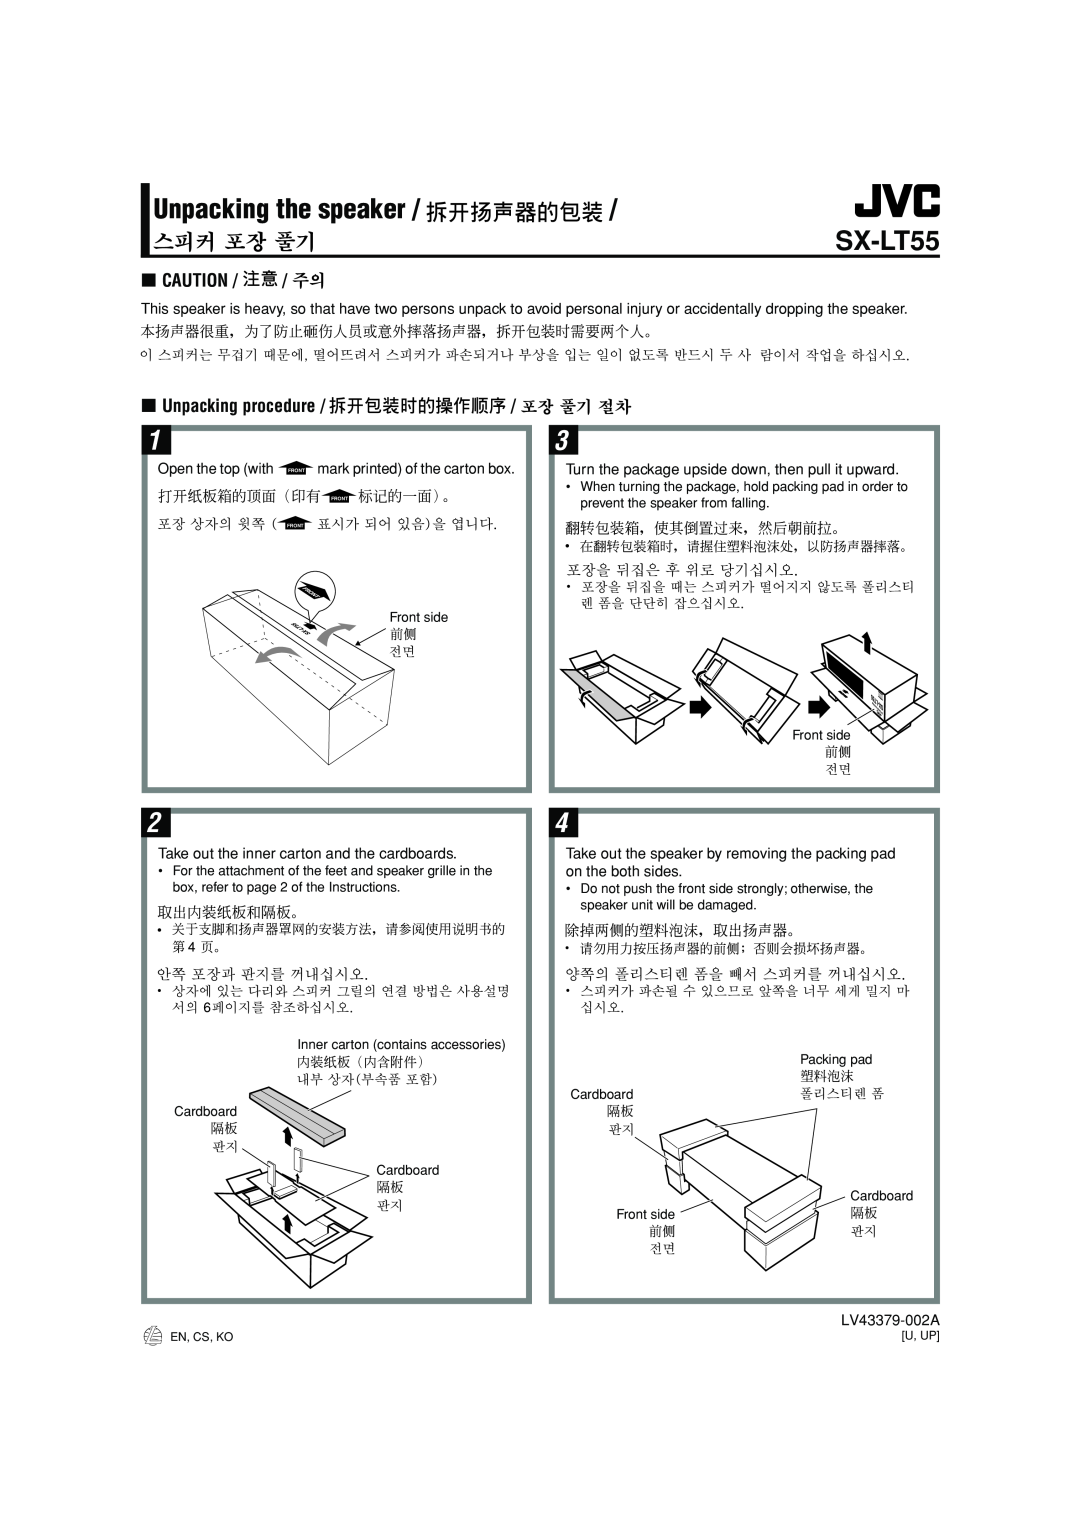 JVC SX-LT55U manual Unpacking the speaker SX-LT55, 7CAUTION, Unpacking procedure 